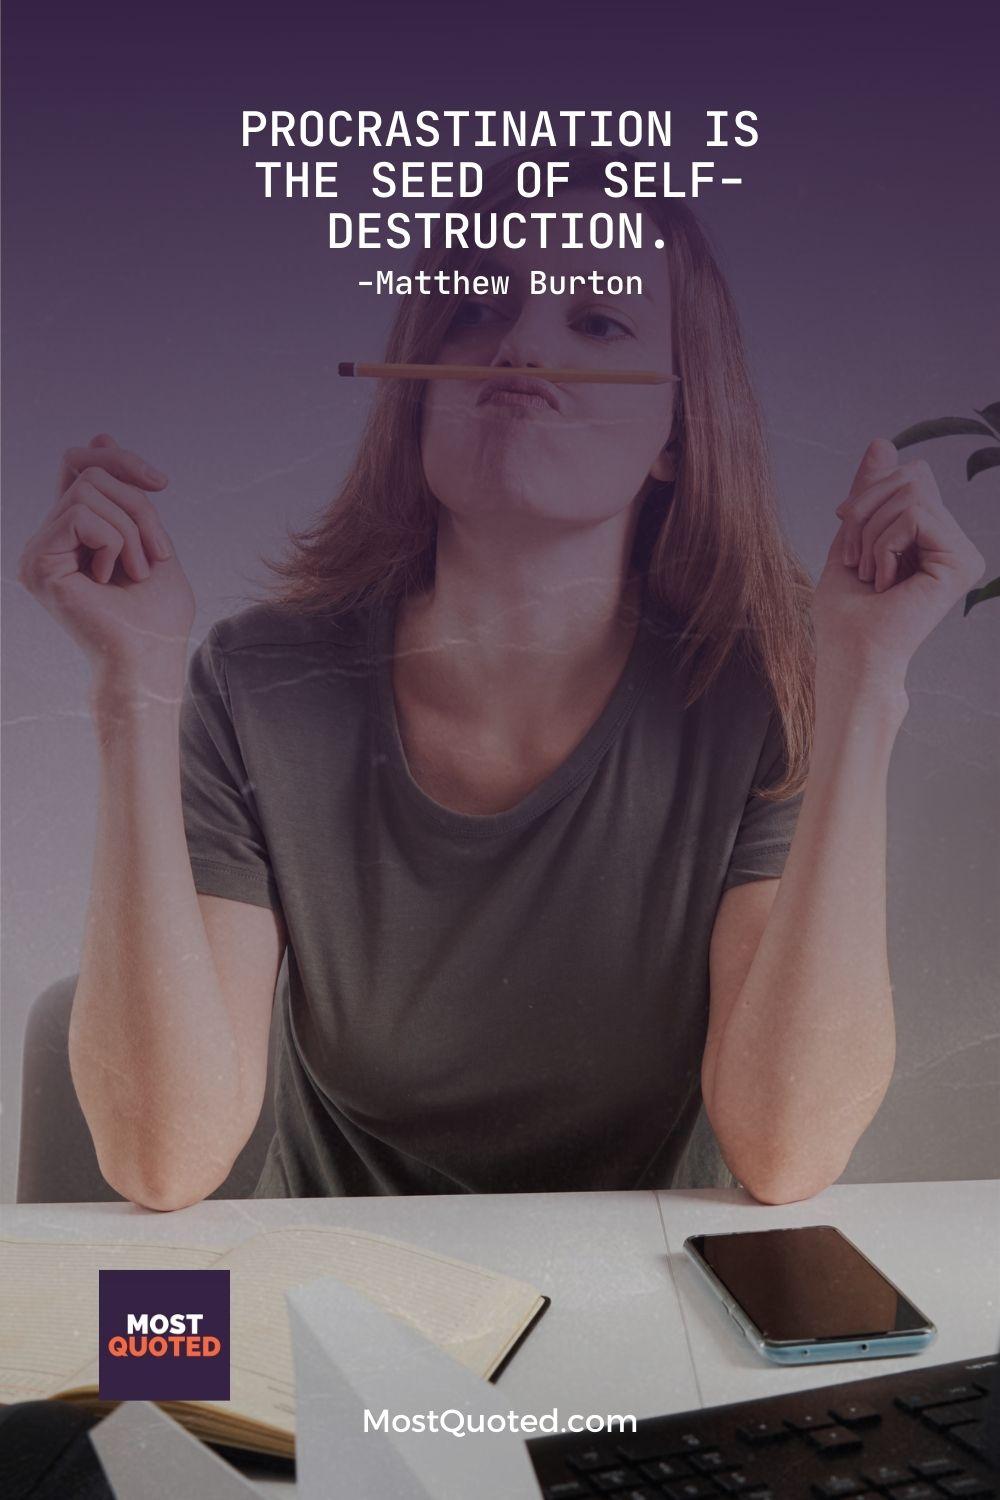 Procrastination is the seed of self-destruction. - Matthew Burton